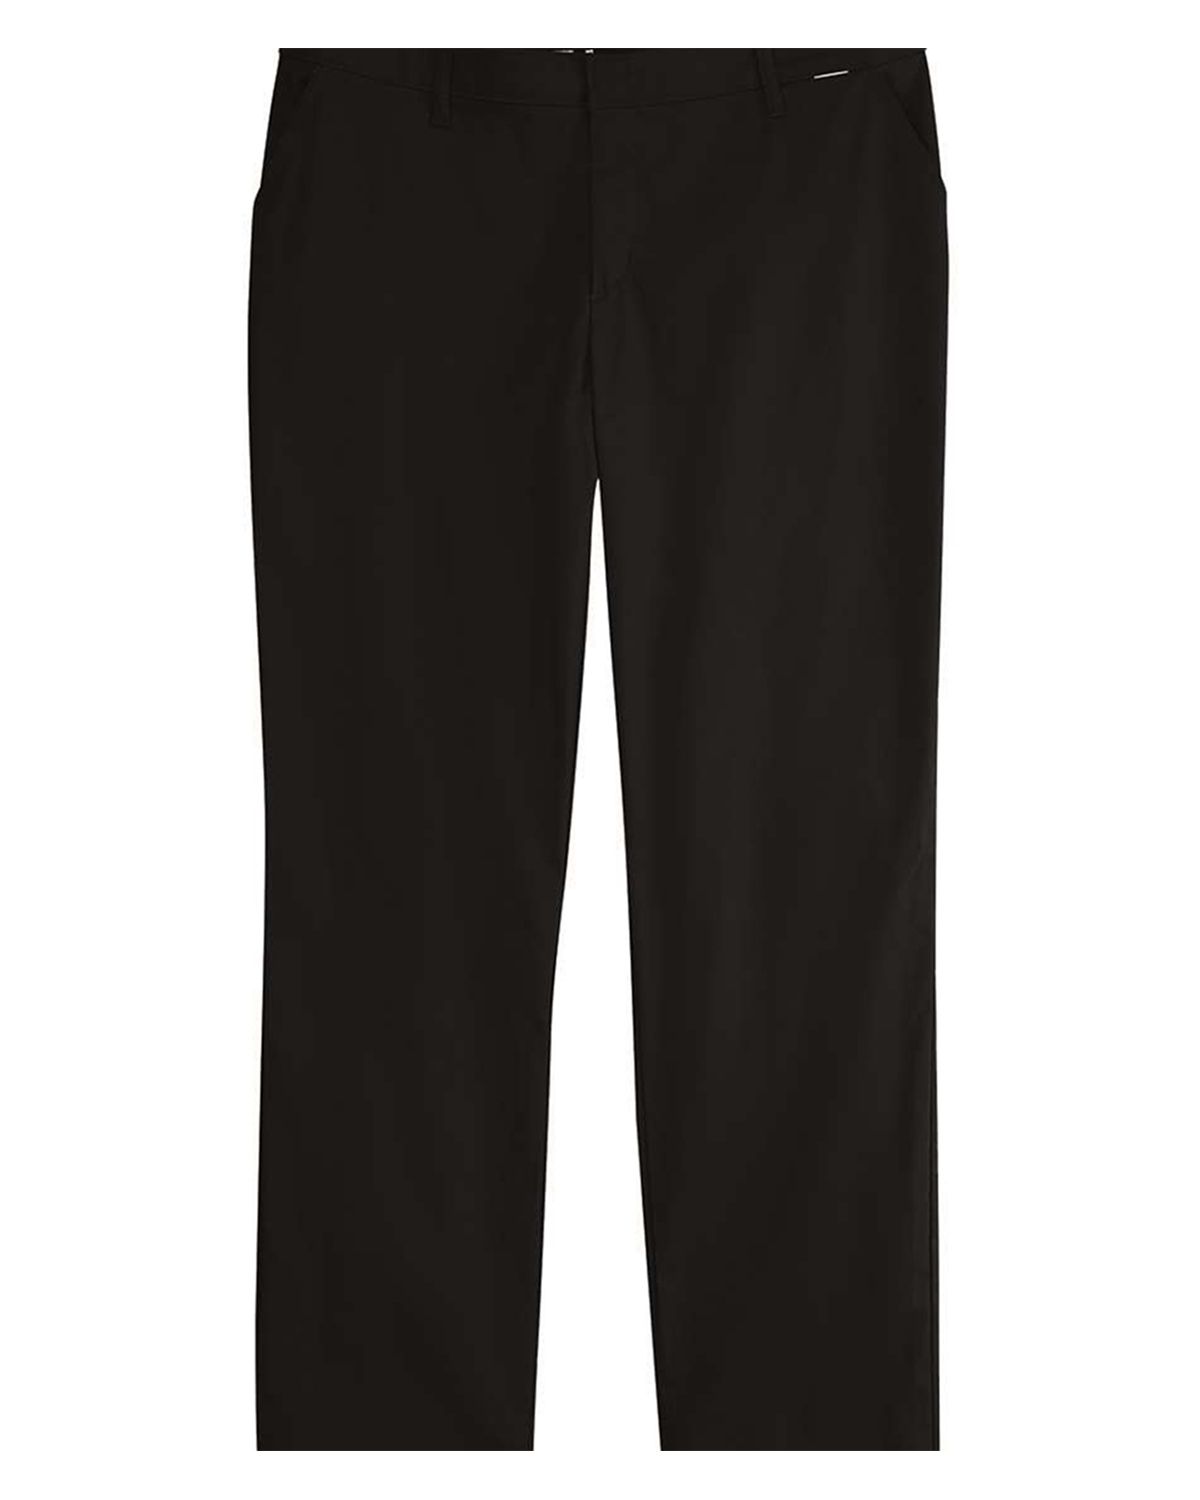 UPC 889440003846 product image for Dickies FW21 Women's Premium Flat Front Pants - Plus - Black - 20 | upcitemdb.com